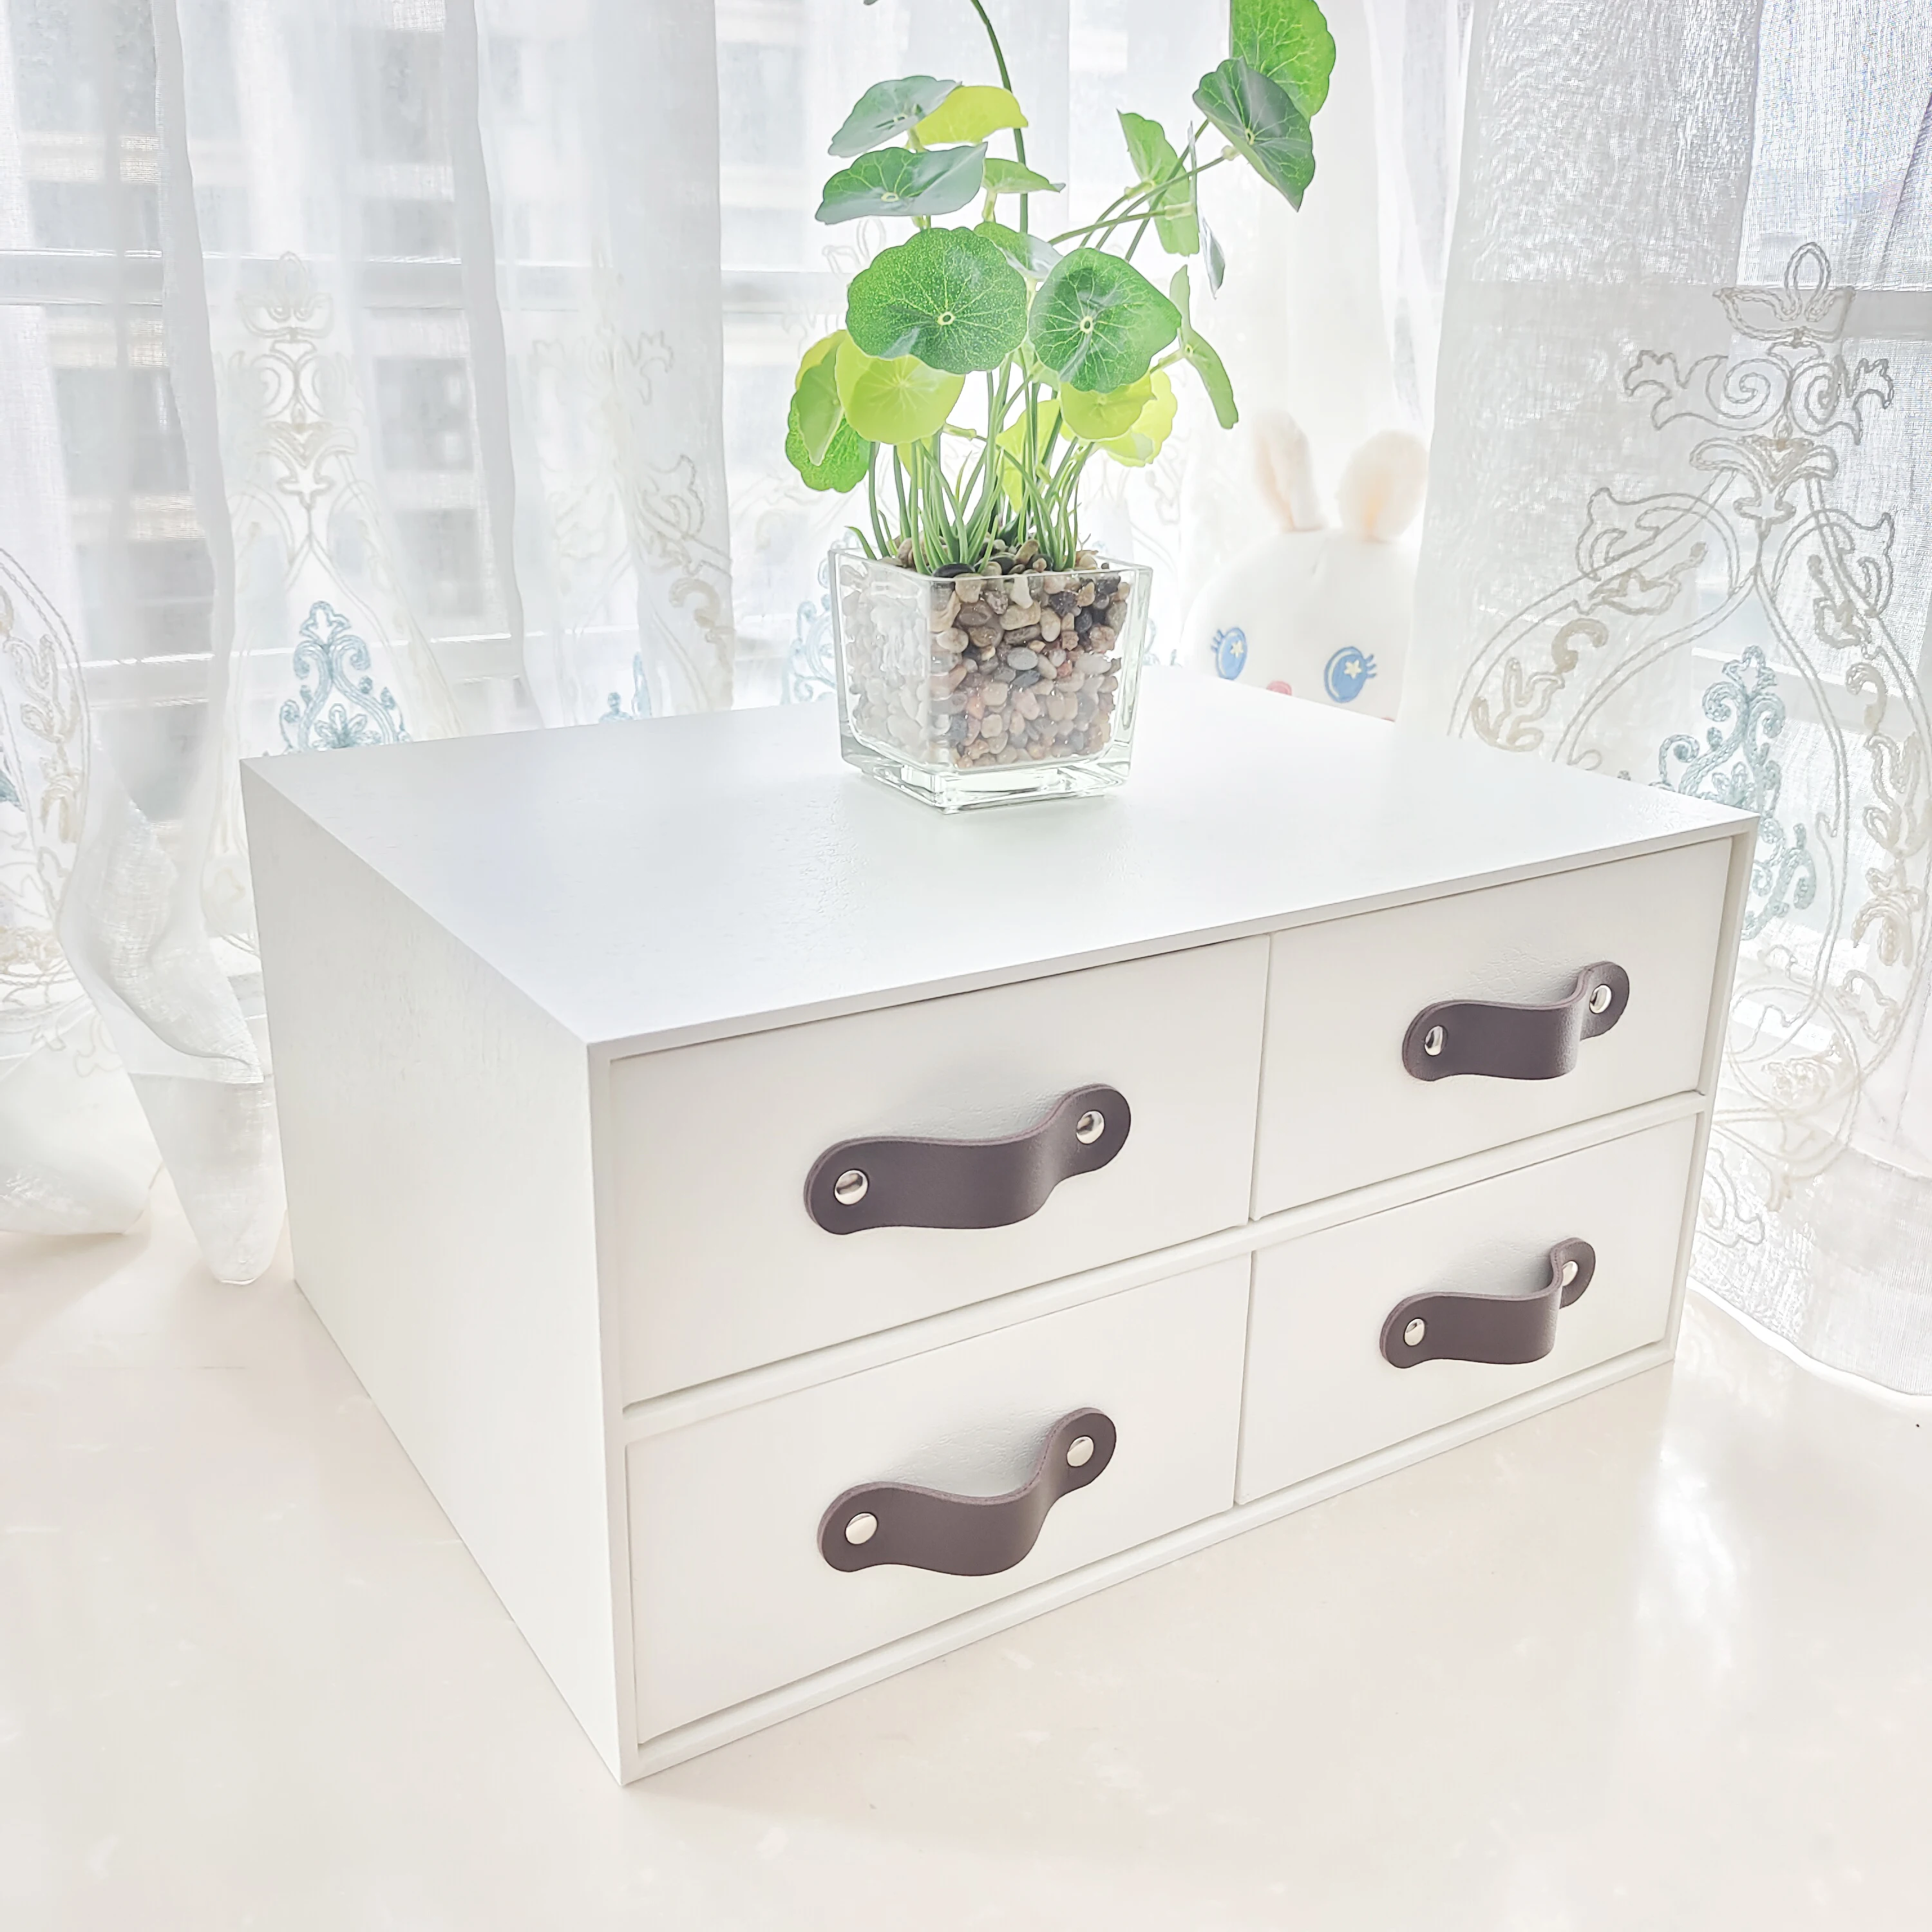 3 Layers Cabinet Cardboard Office Desk Top Organizer Home Storage 3 Drawers  Cabinet Beige Faux Linen Natural Paper (2pcs) - Magazine Organizer -  AliExpress